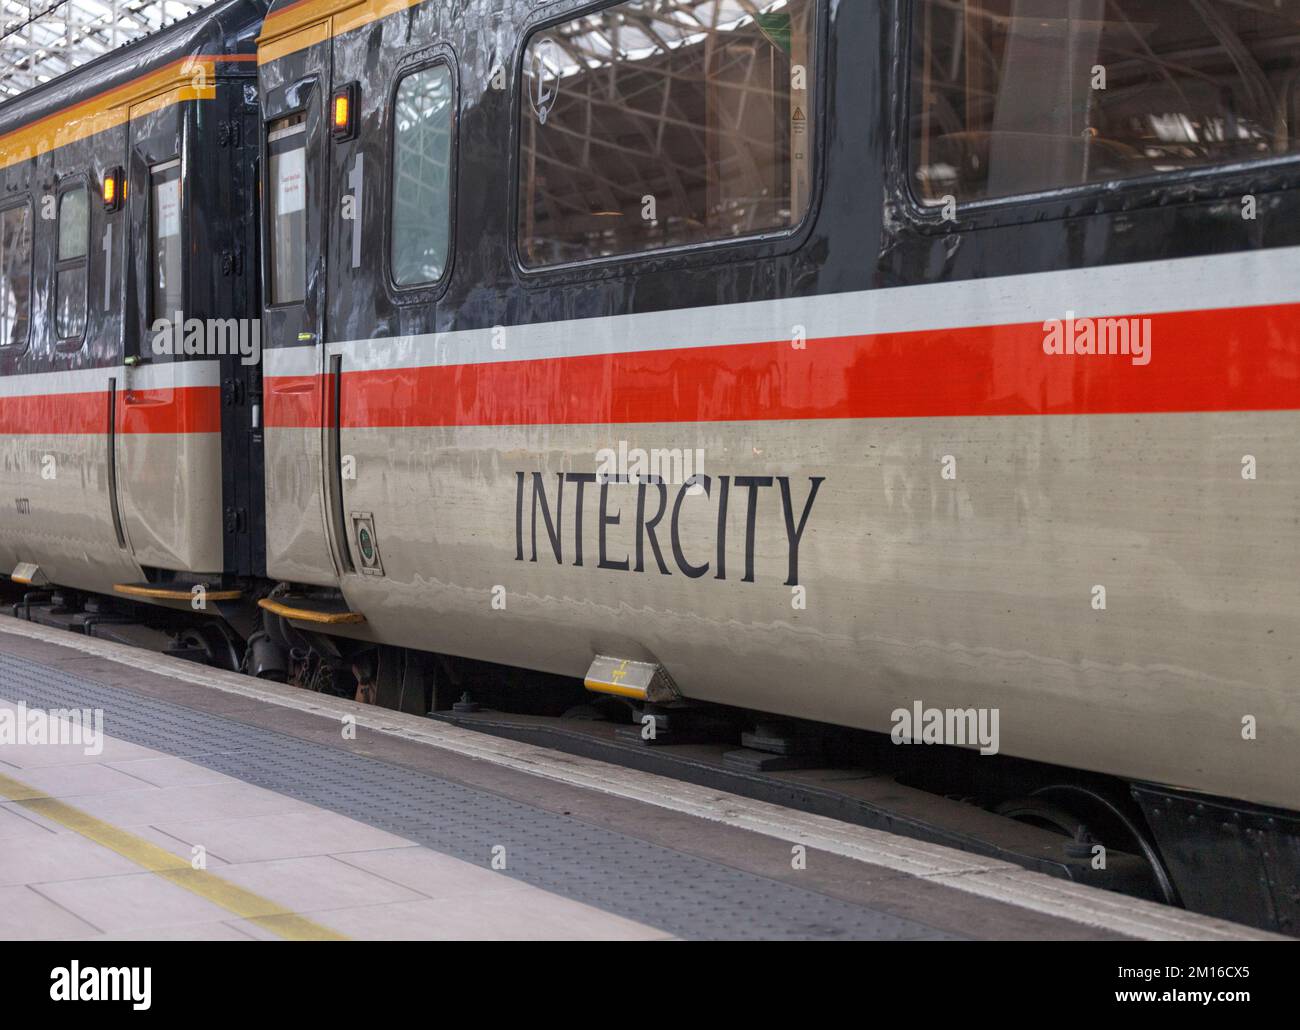 Intercity logo and livery on a LSL Intercity railtours mark 3 railway carriage Stock Photo